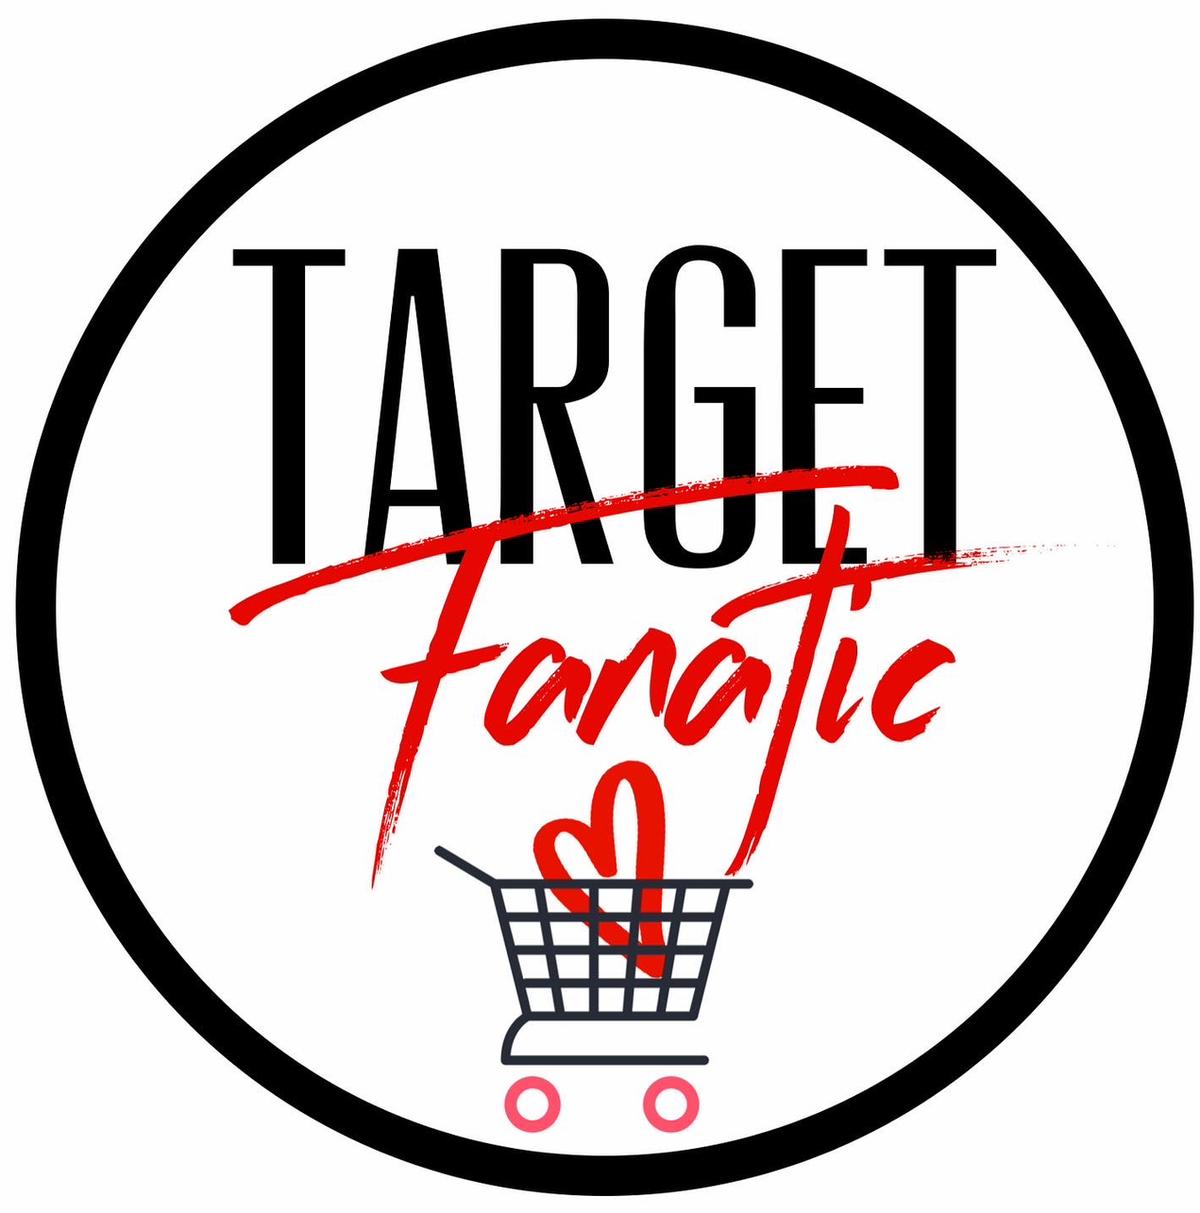 Targetfanatic's images